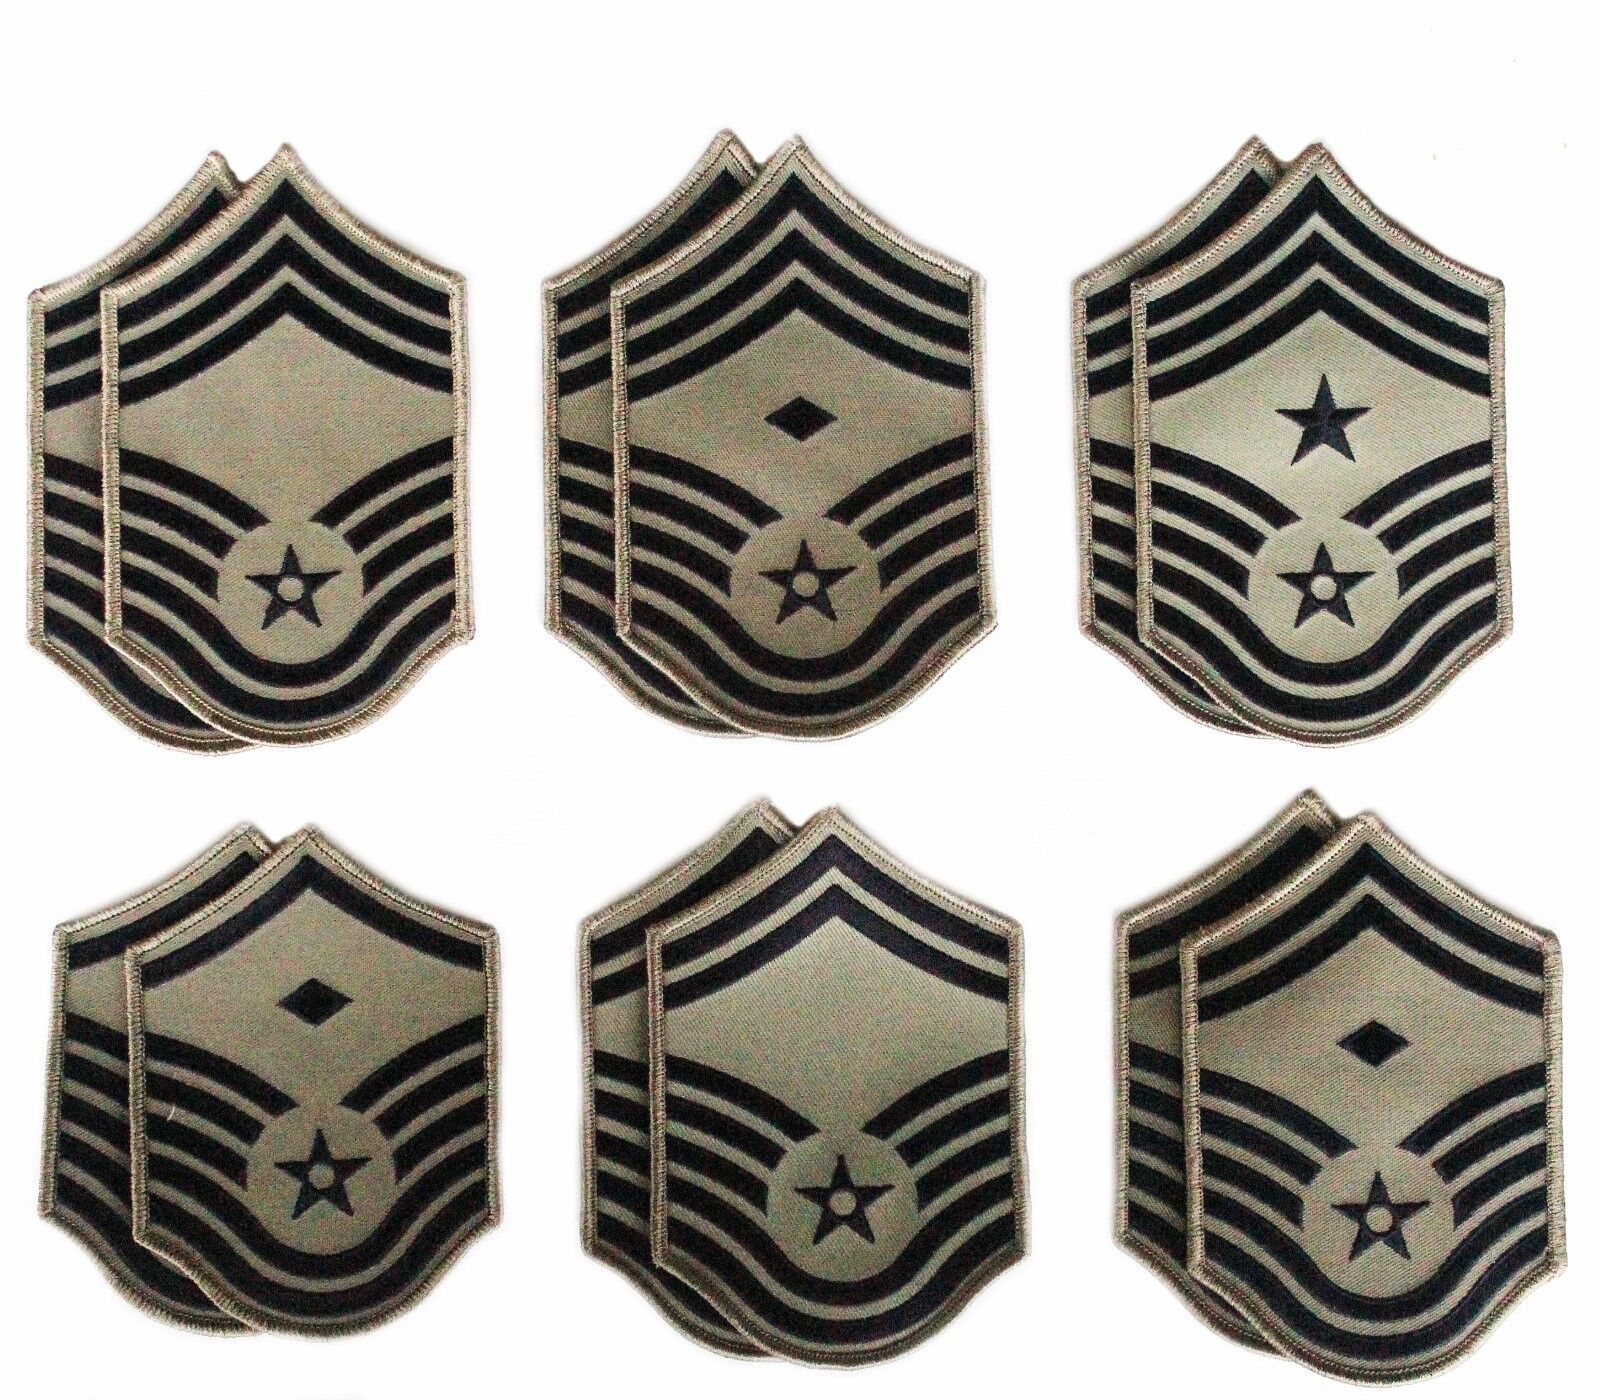 6 Pair of US Air Force Senior Master Sergeant Rank Chevron ABU Patches - Female